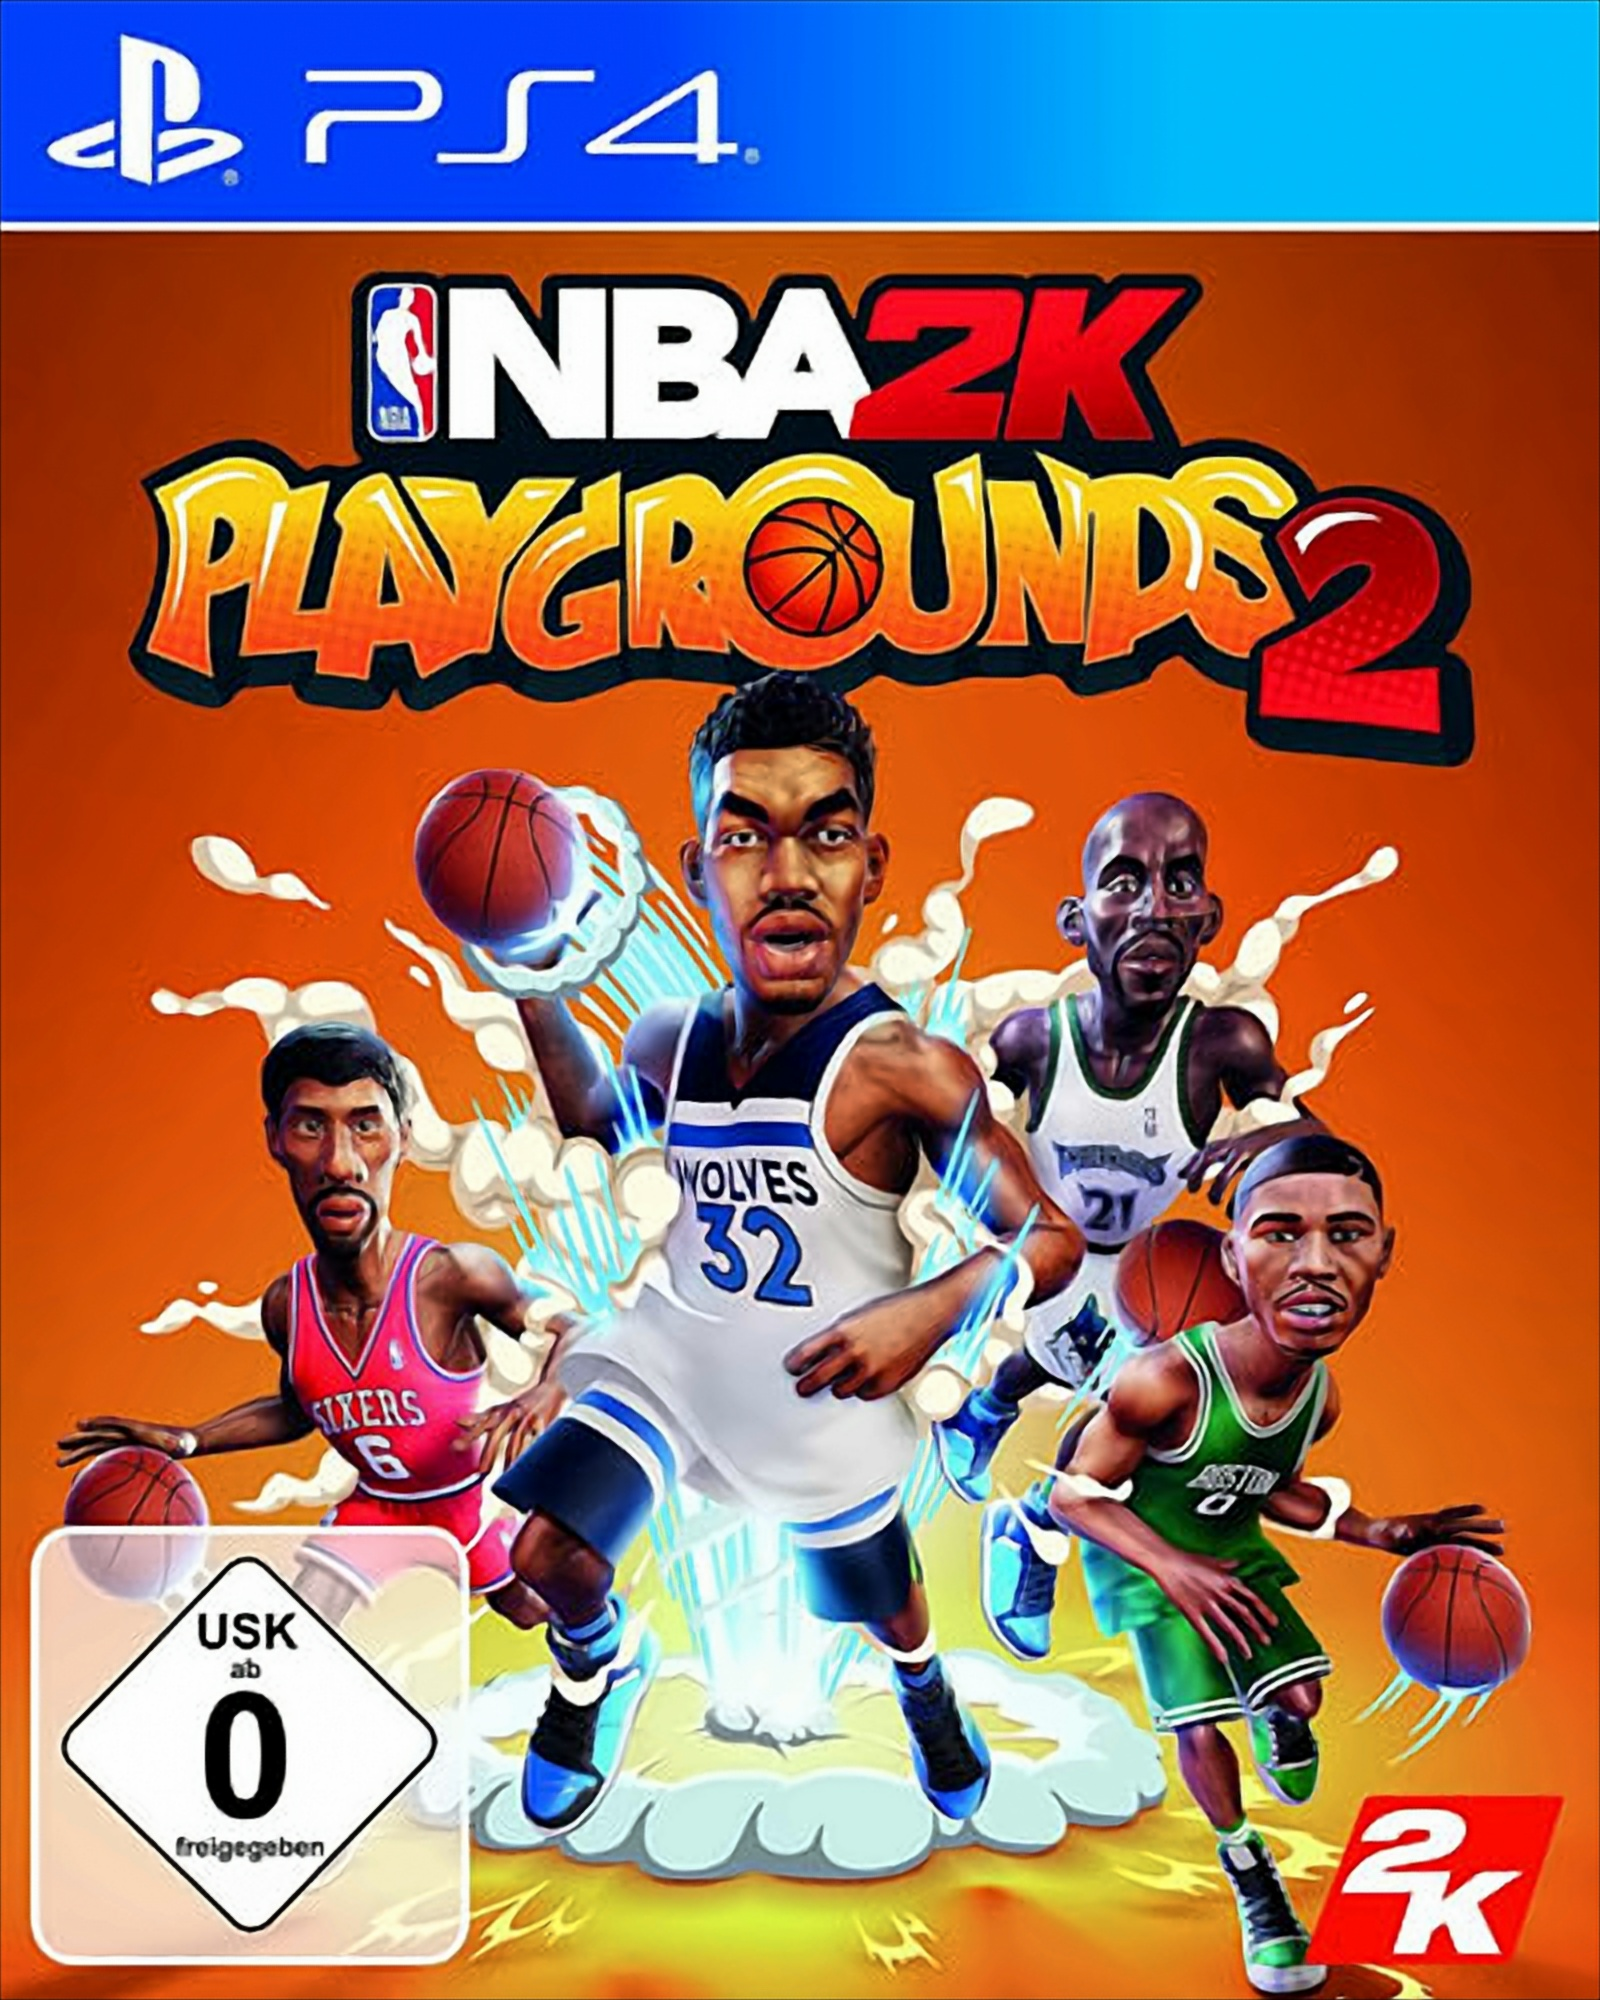 4] 2 NBA [PlayStation 2K - PS4 Playgrounds